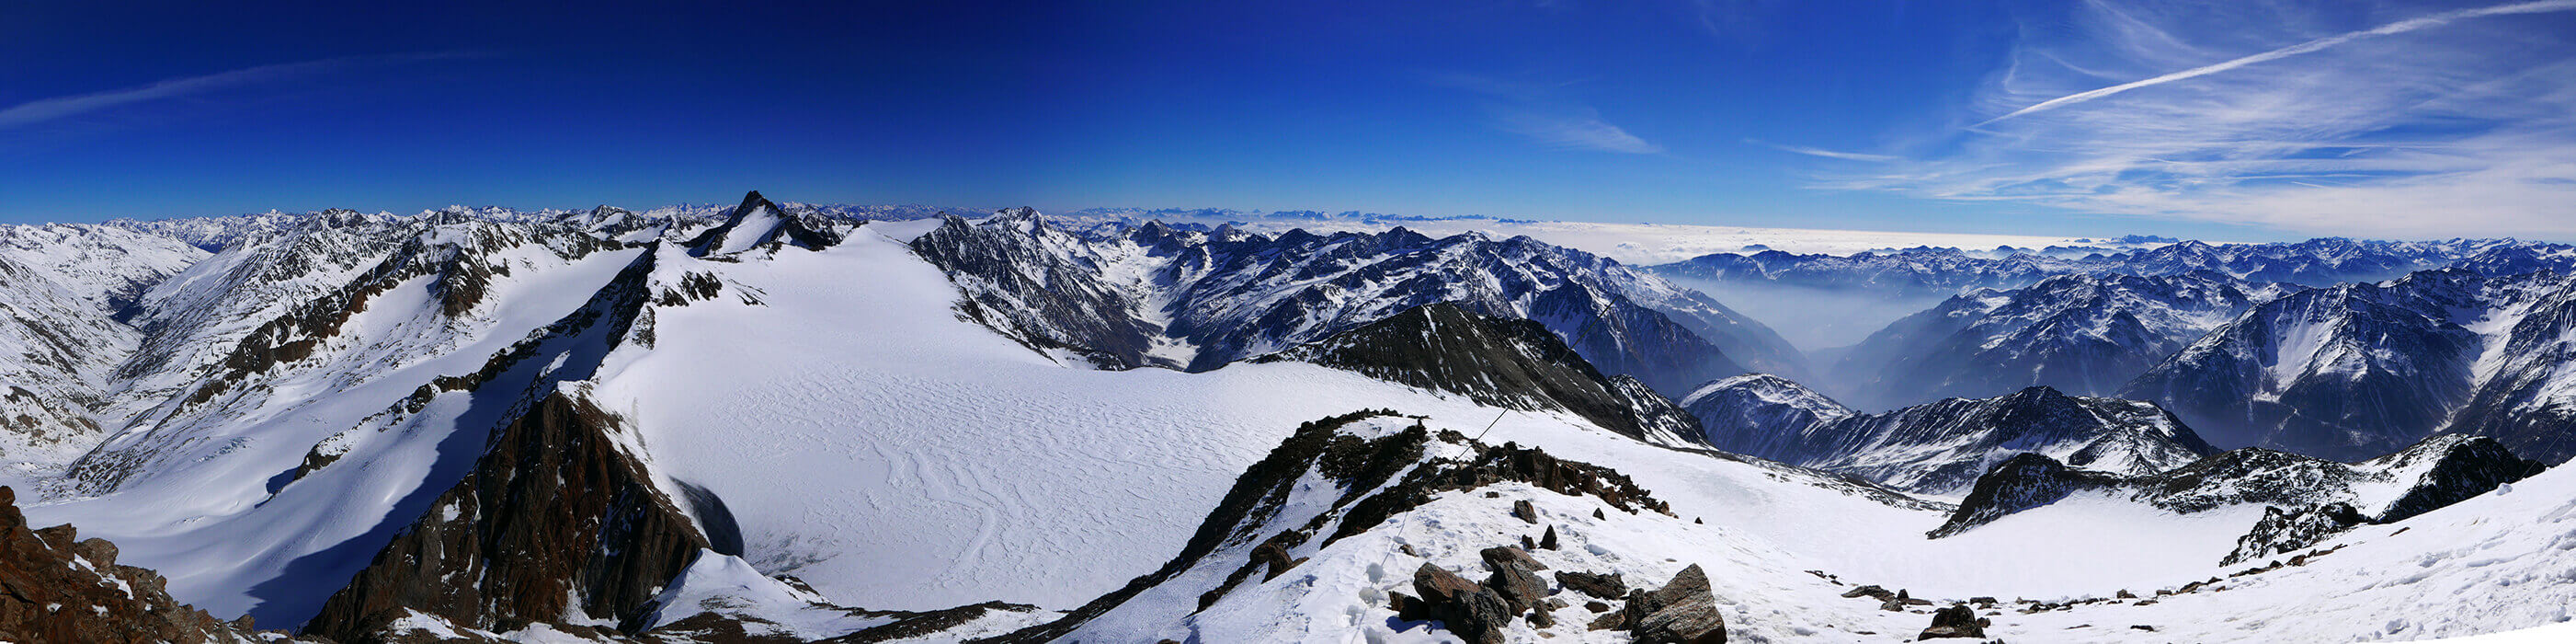 Similaun N, from Martin-Busch-Hütte Ötztaler Alpen / Alpi Venoste Rakousko panorama 34